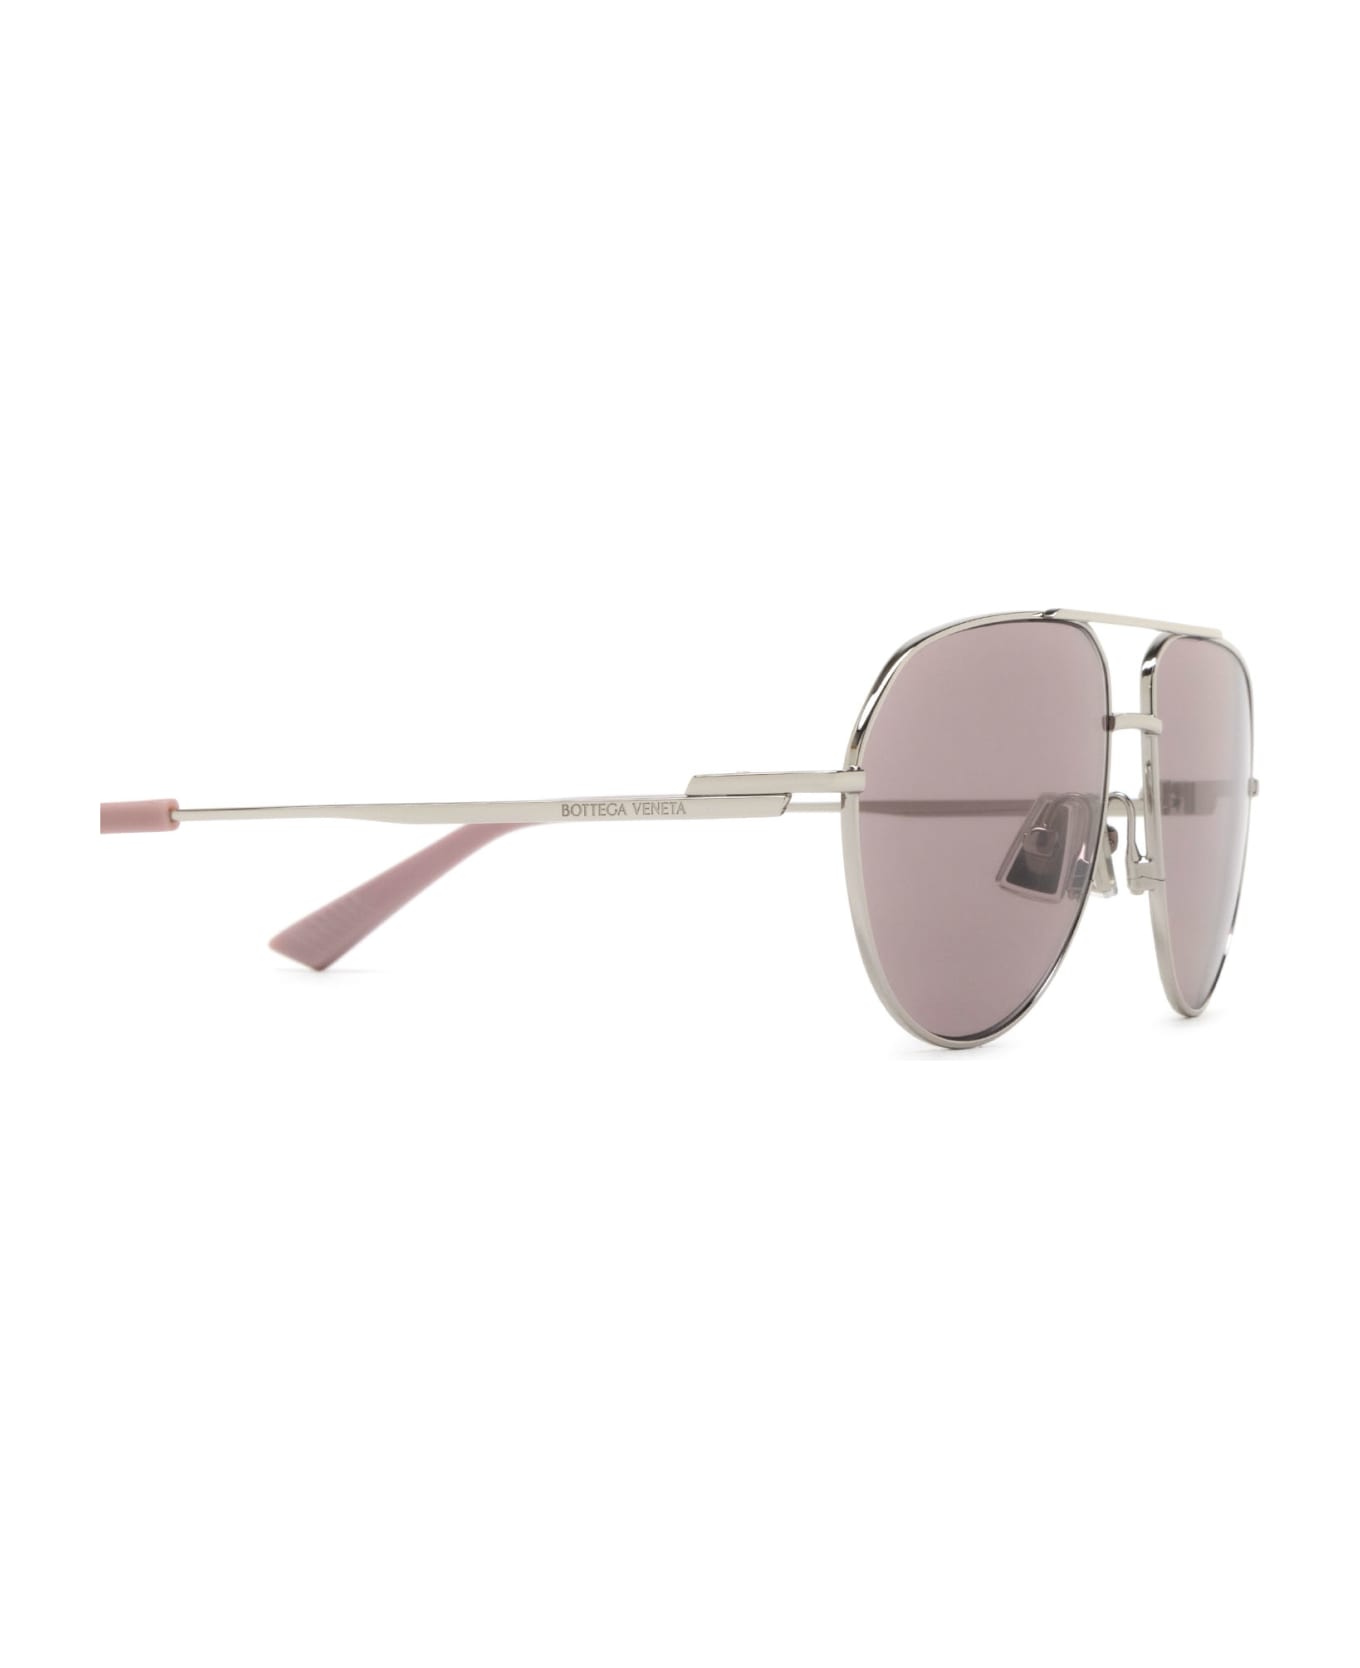 Bottega Veneta Eyewear Bv1302s Silver Sunglasses - Silver